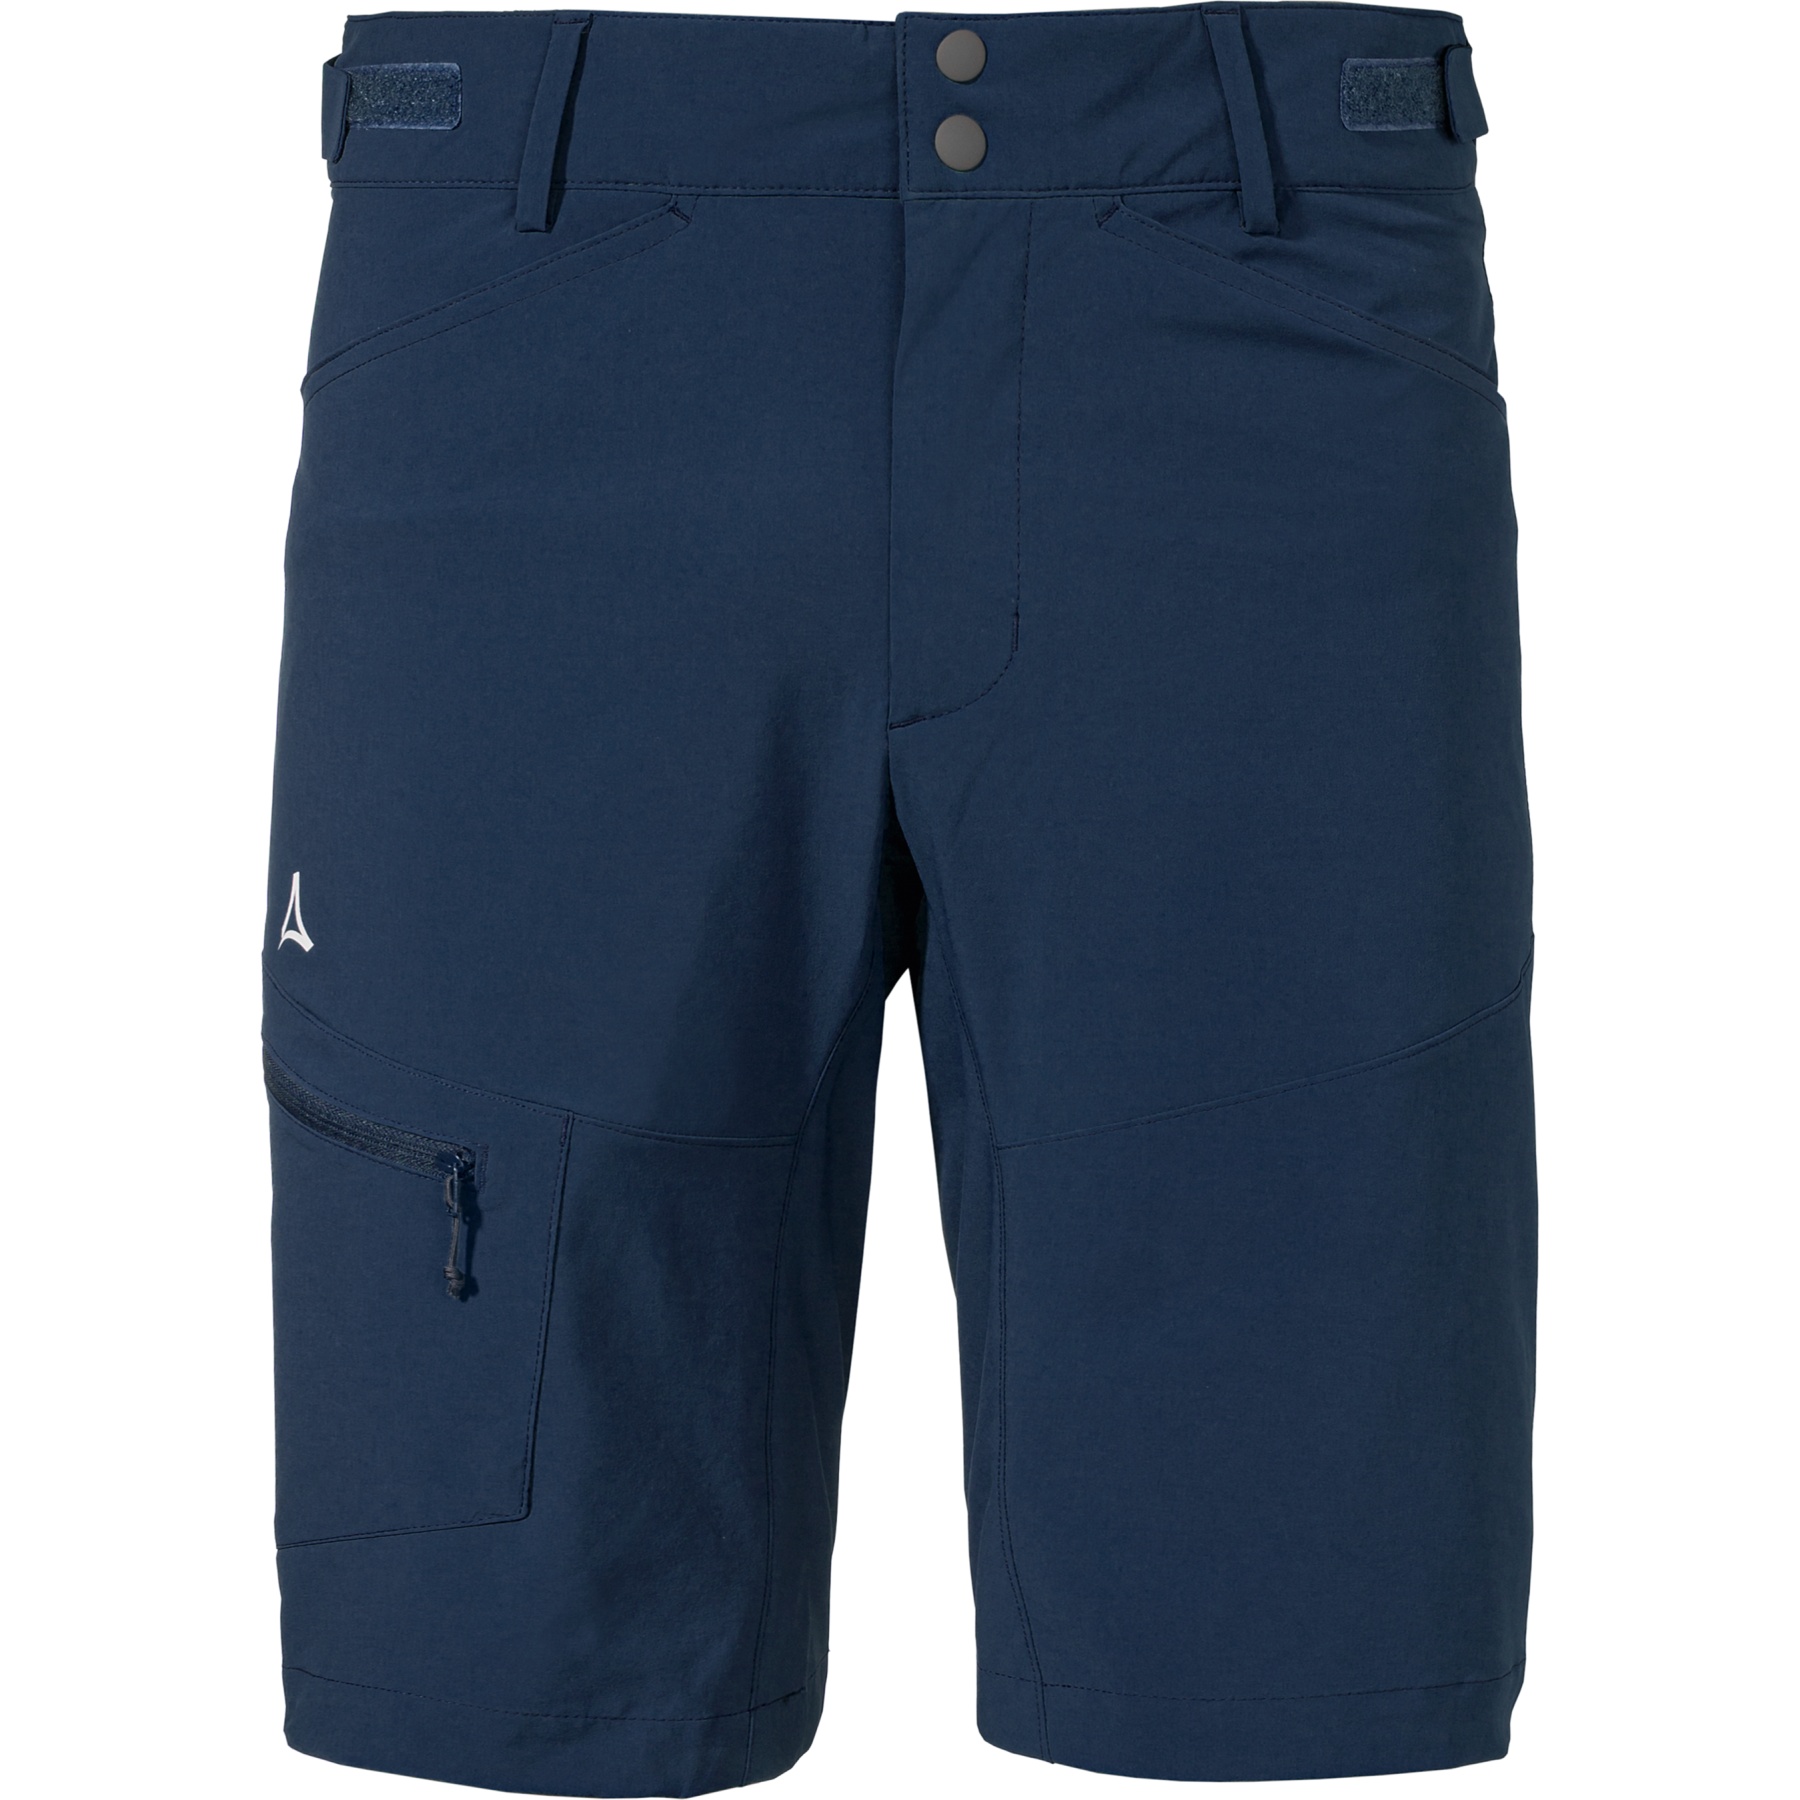 Schöffel Algarve Shorts - dress blues | 8180 BIKE24